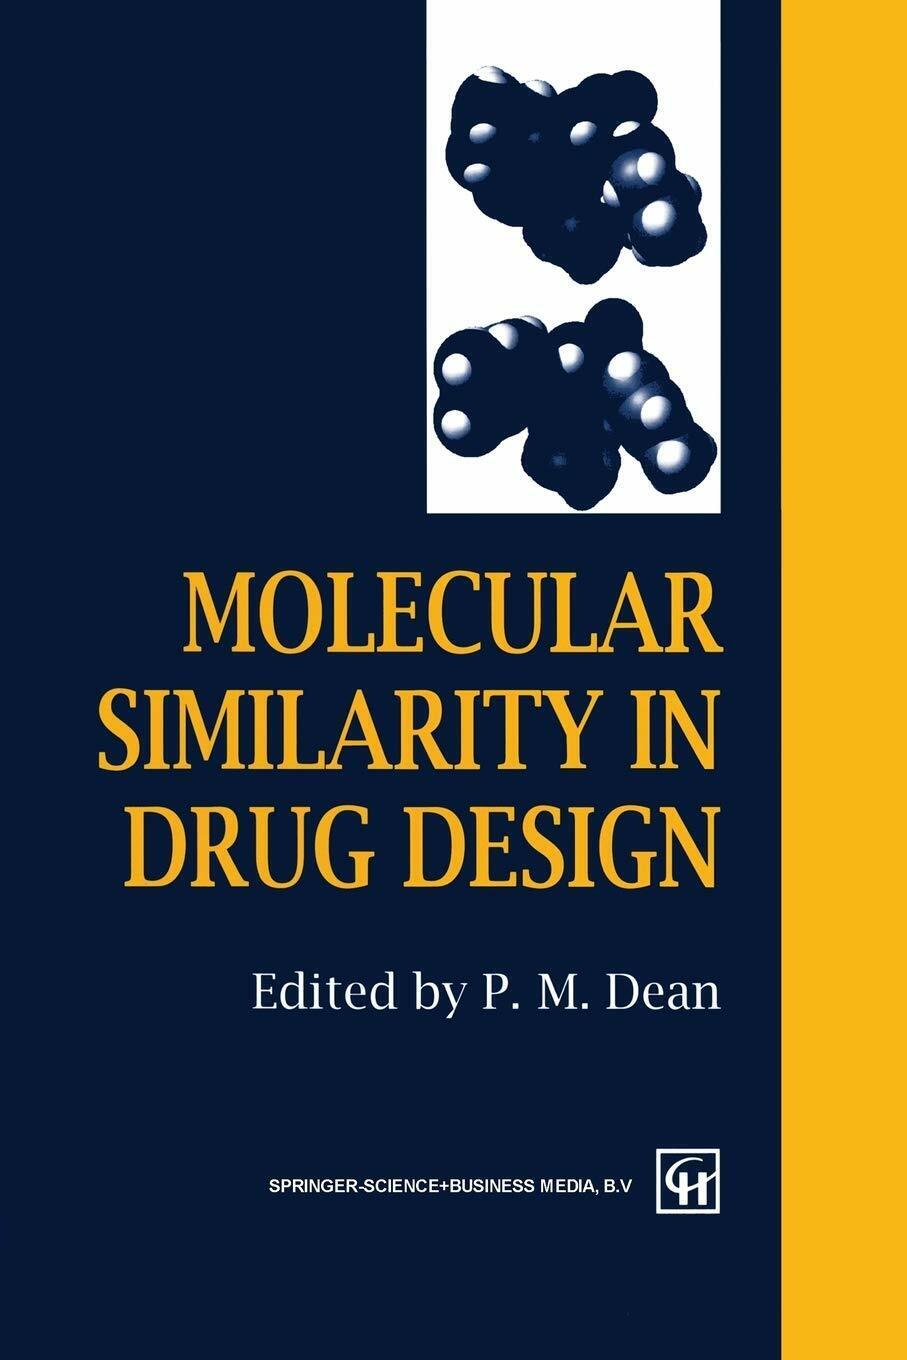 Molecular Similarity in Drug Design - P.M. Dean - Springer, 2012